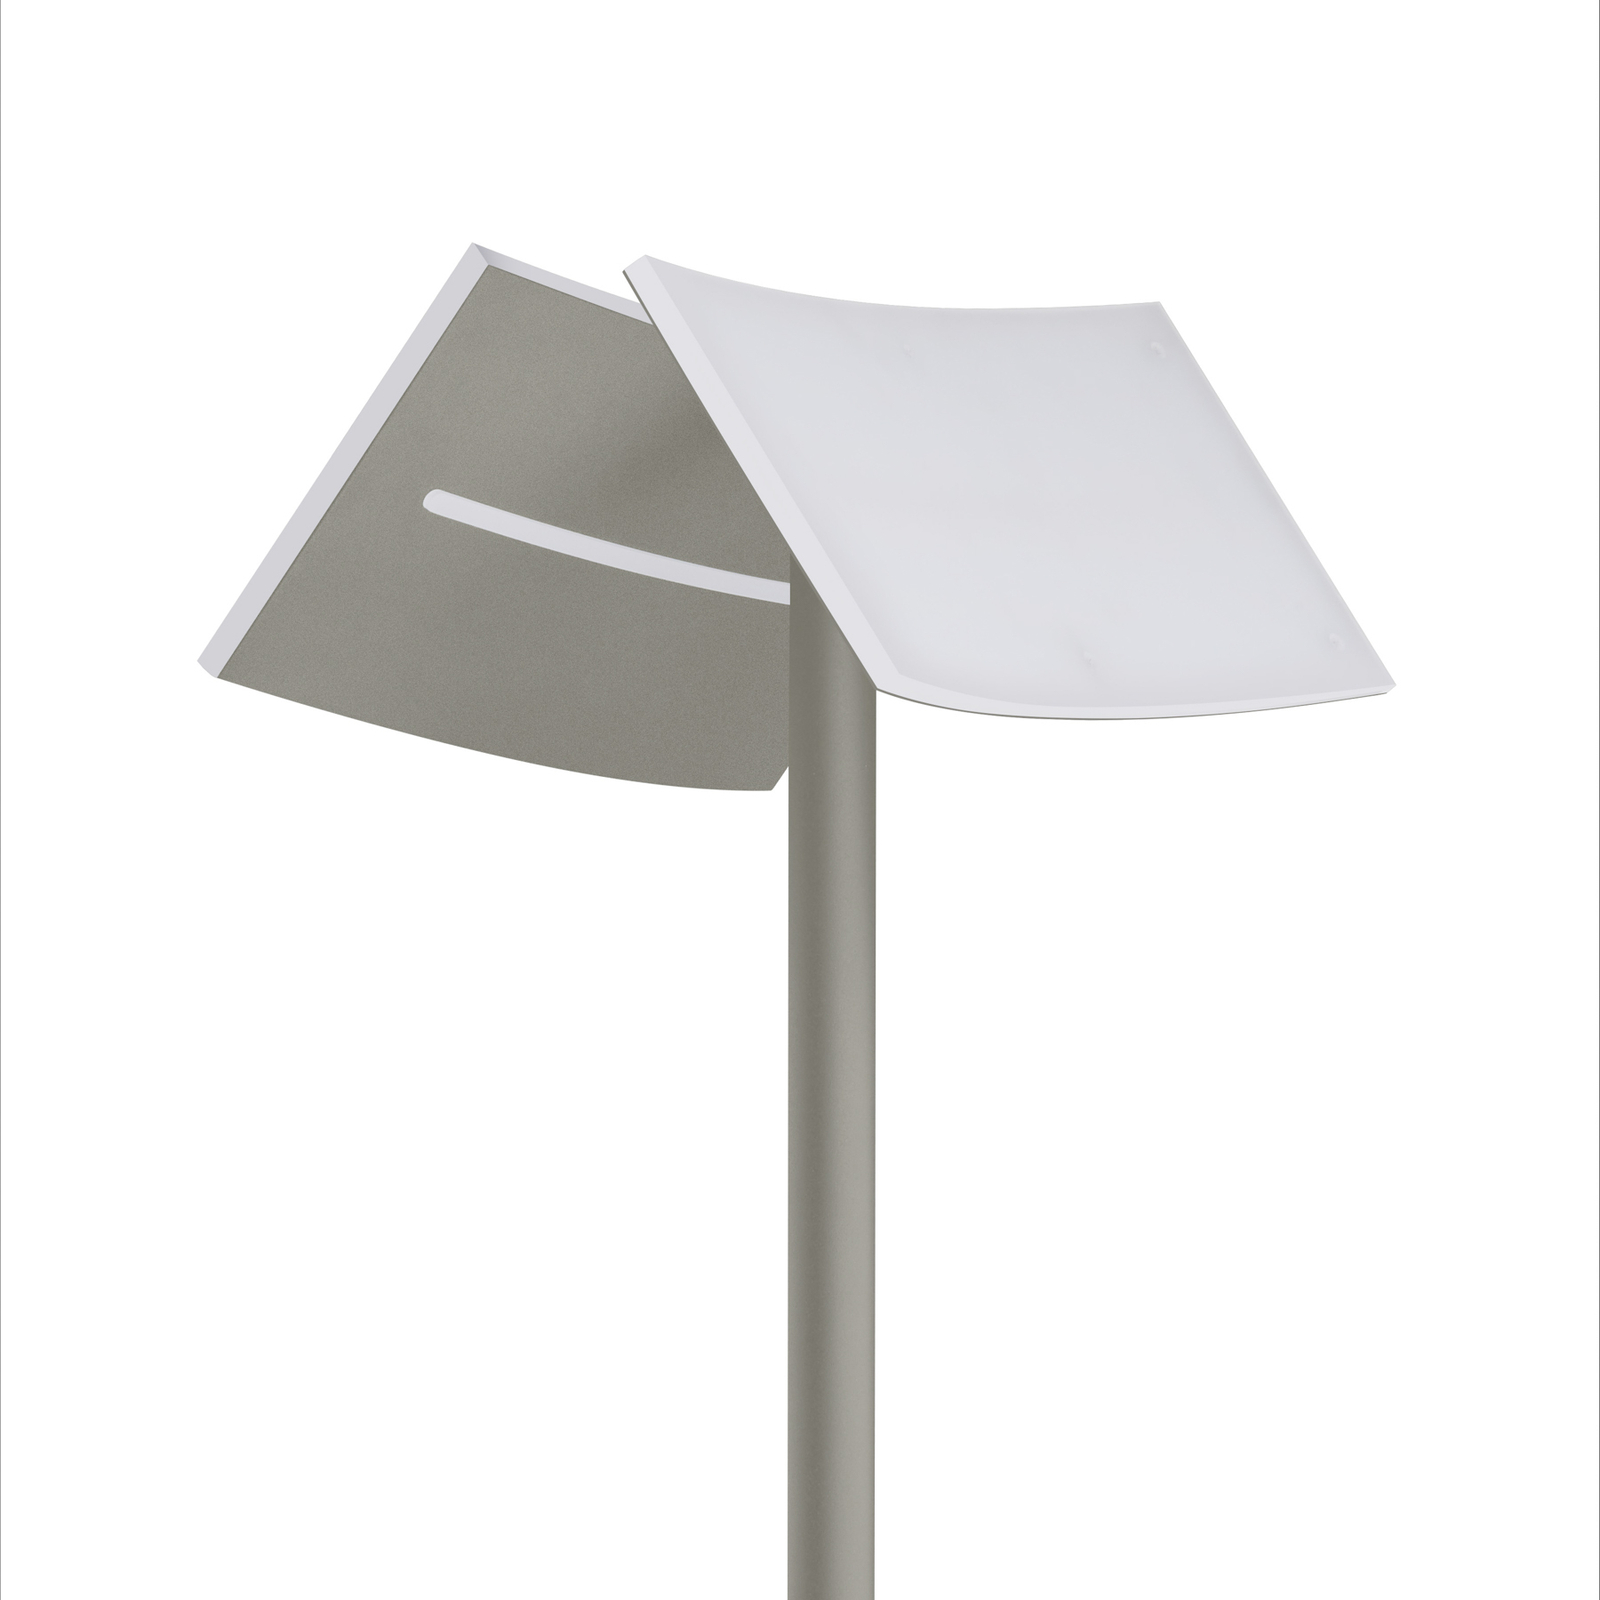 Lampa stojąca LED Evolo CCT a lampką, taupe